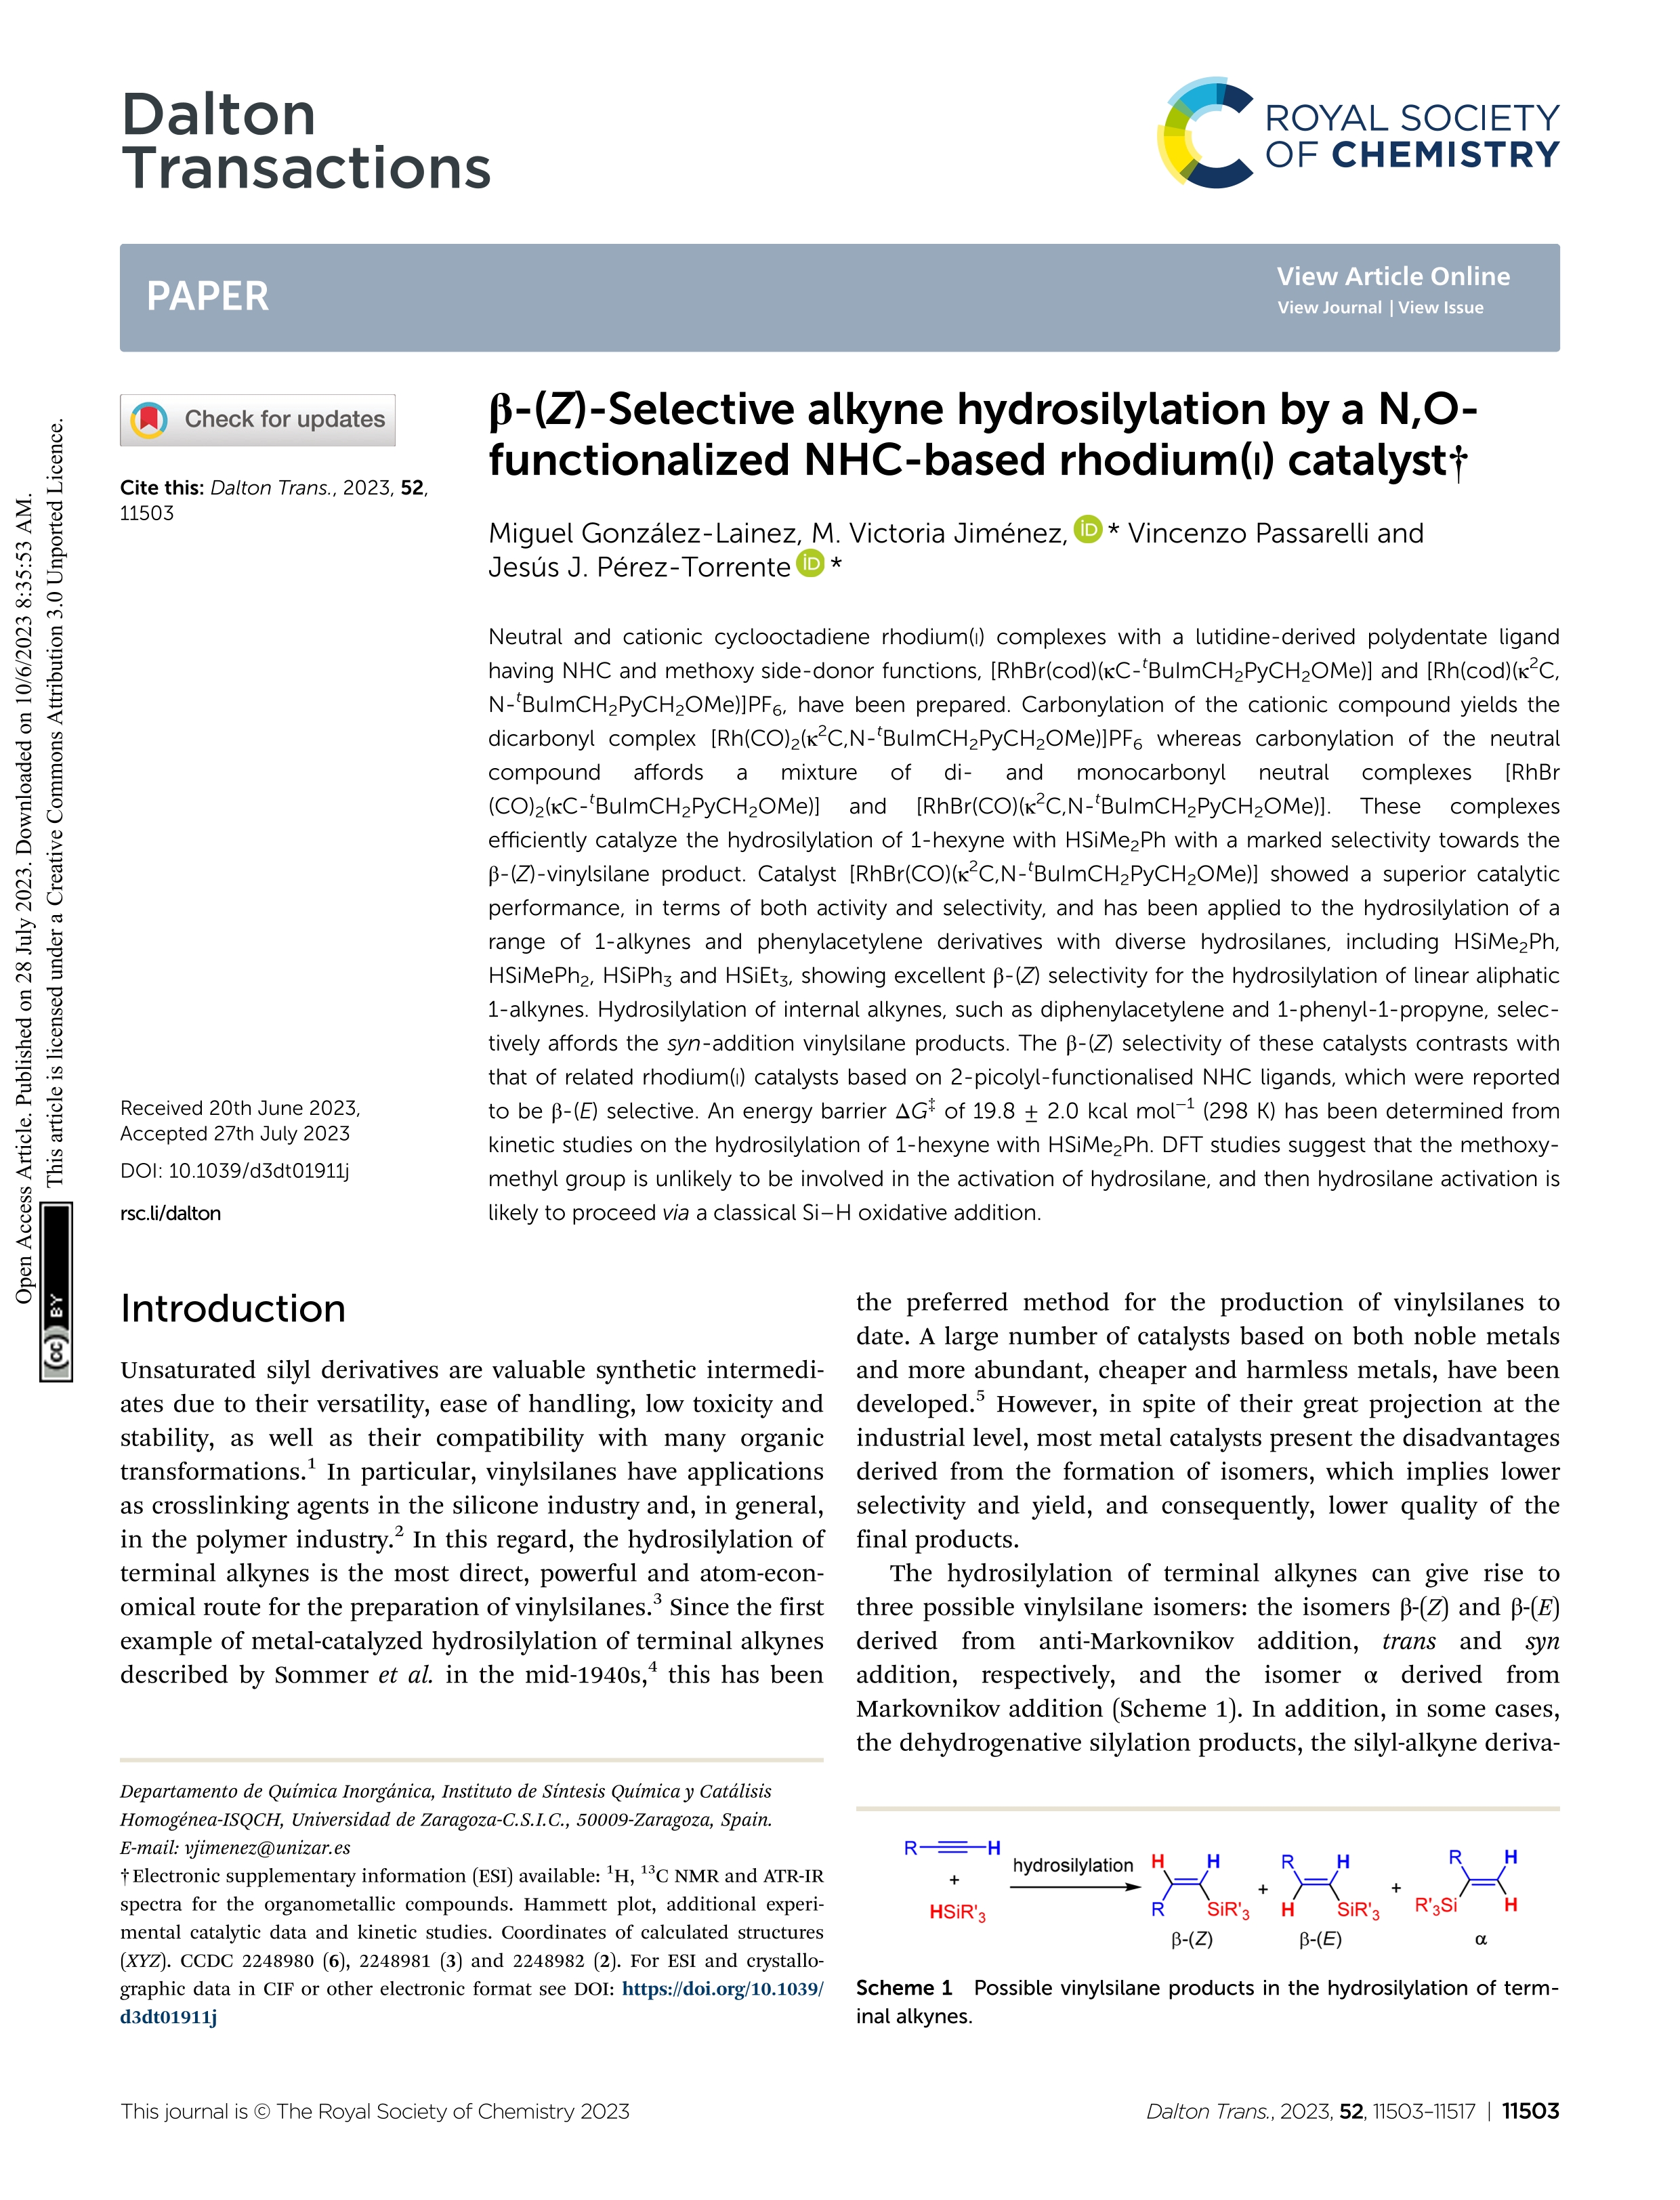 ß-(Z)-Selective alkyne hydrosilylation by a N,O-functionalized NHC-based rhodium(i) catalyst